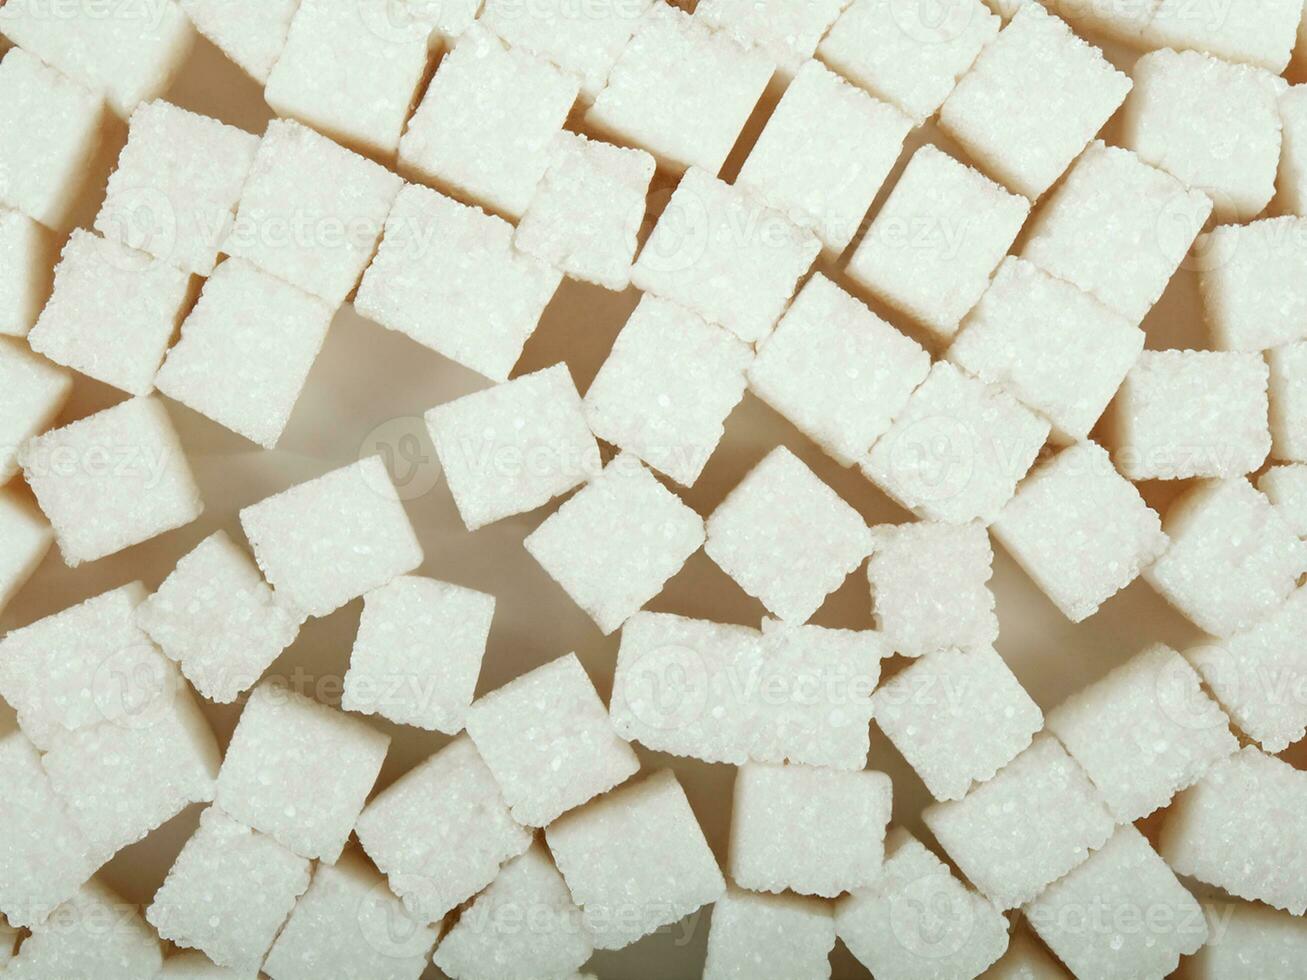 vit socker kuber på en trä- yta, bakgrund foto